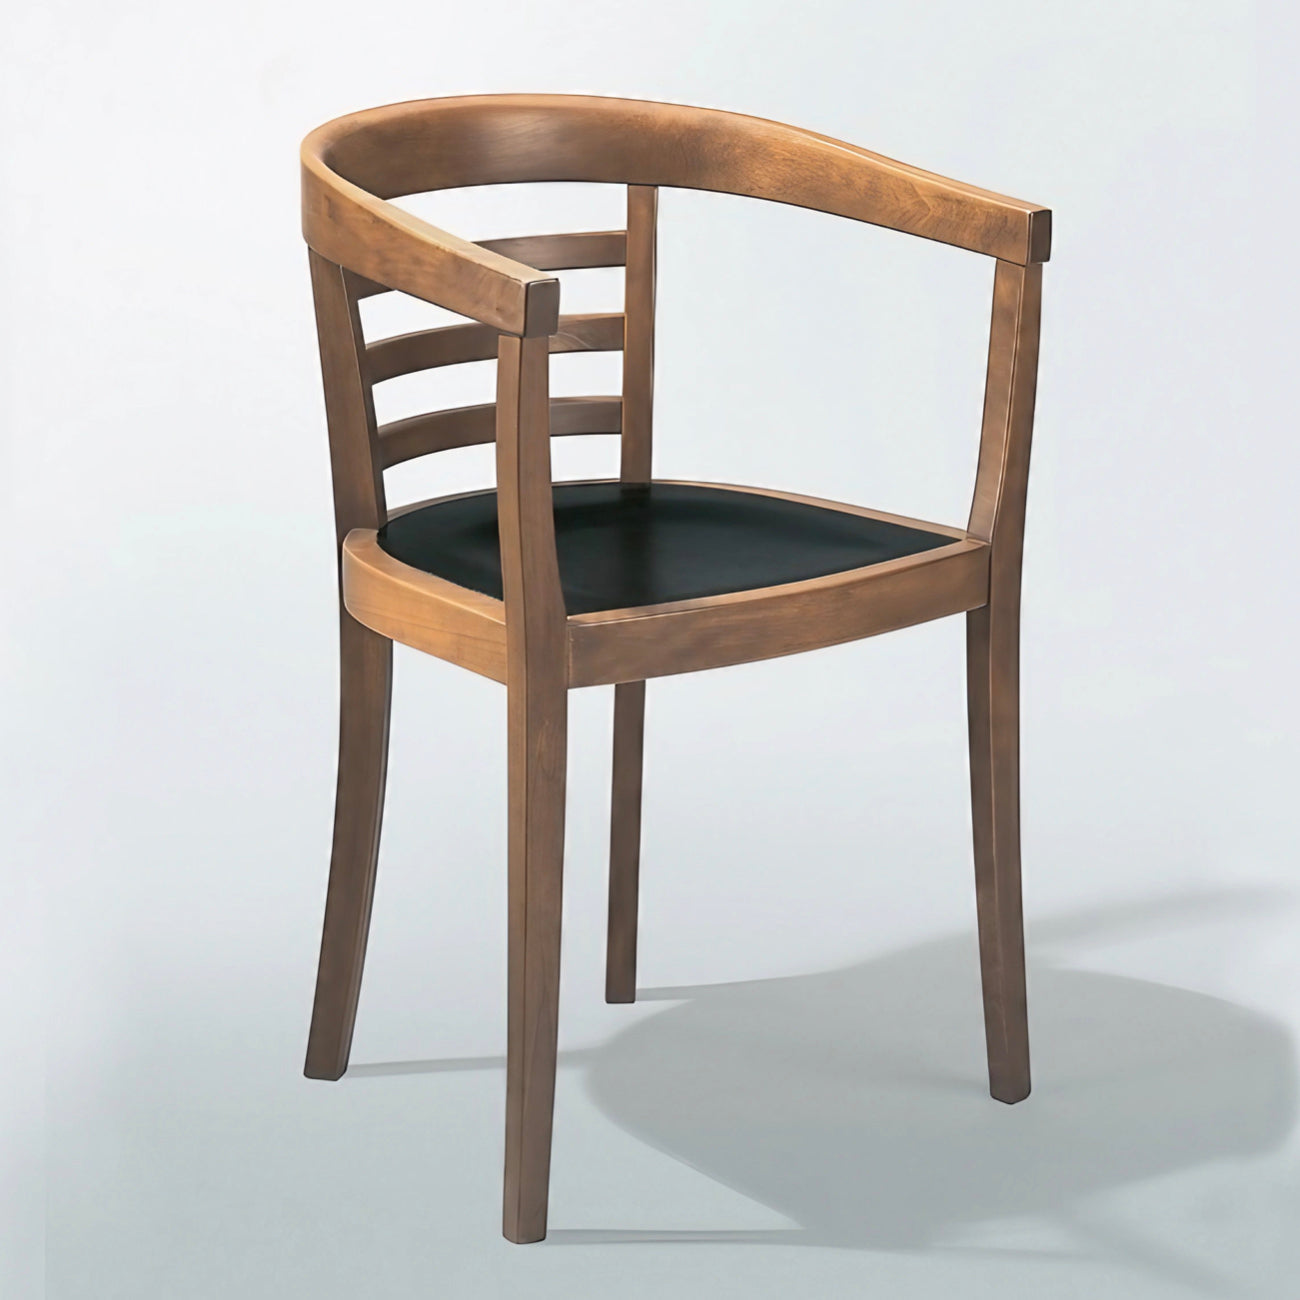 JULIUS WALNUT Chair by Lambert